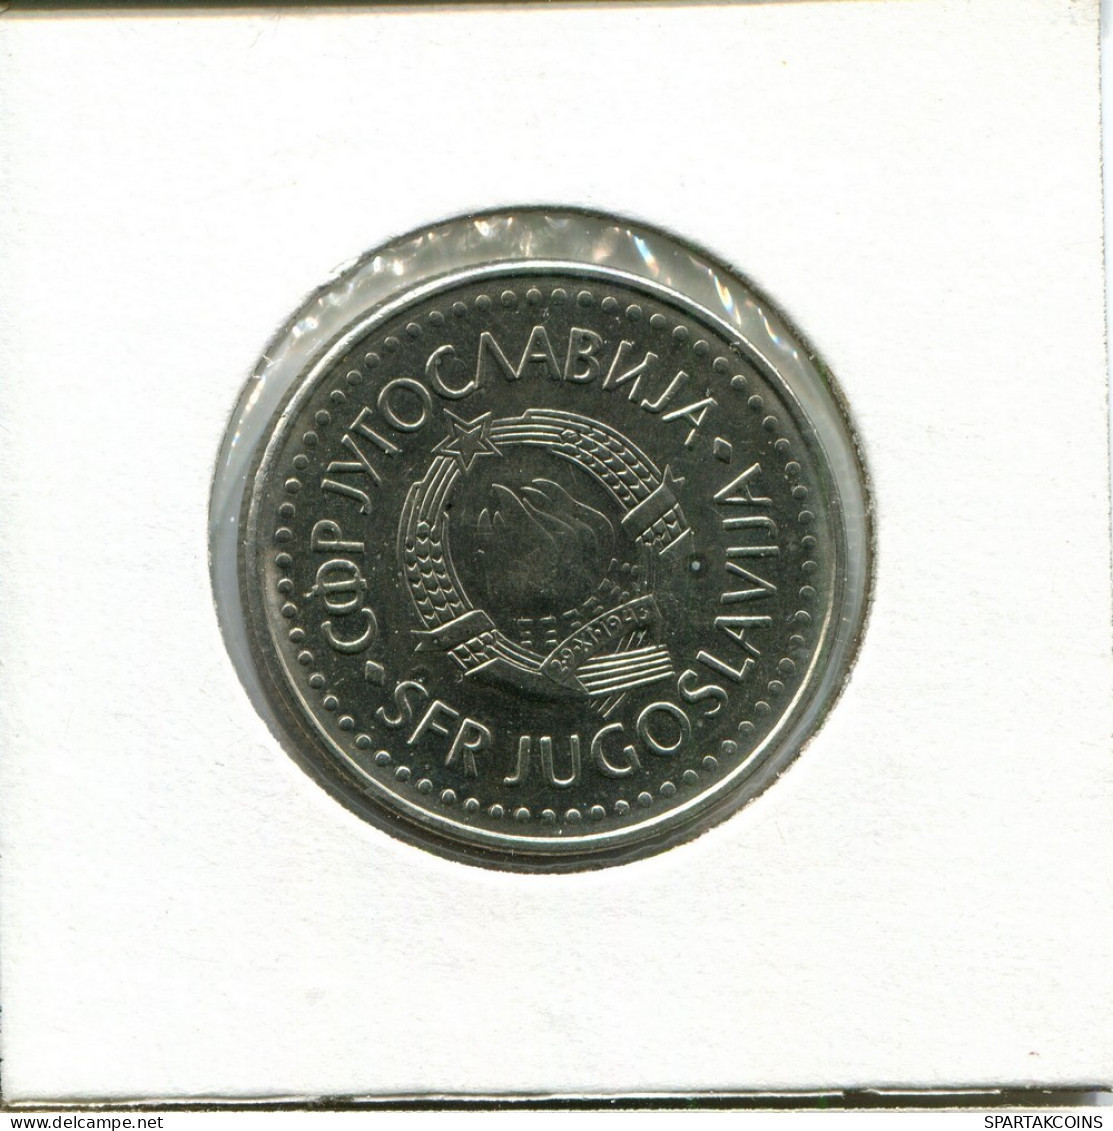 50 DINARA 1985 YUGOSLAVIA Coin #AV164.U.A - Yougoslavie